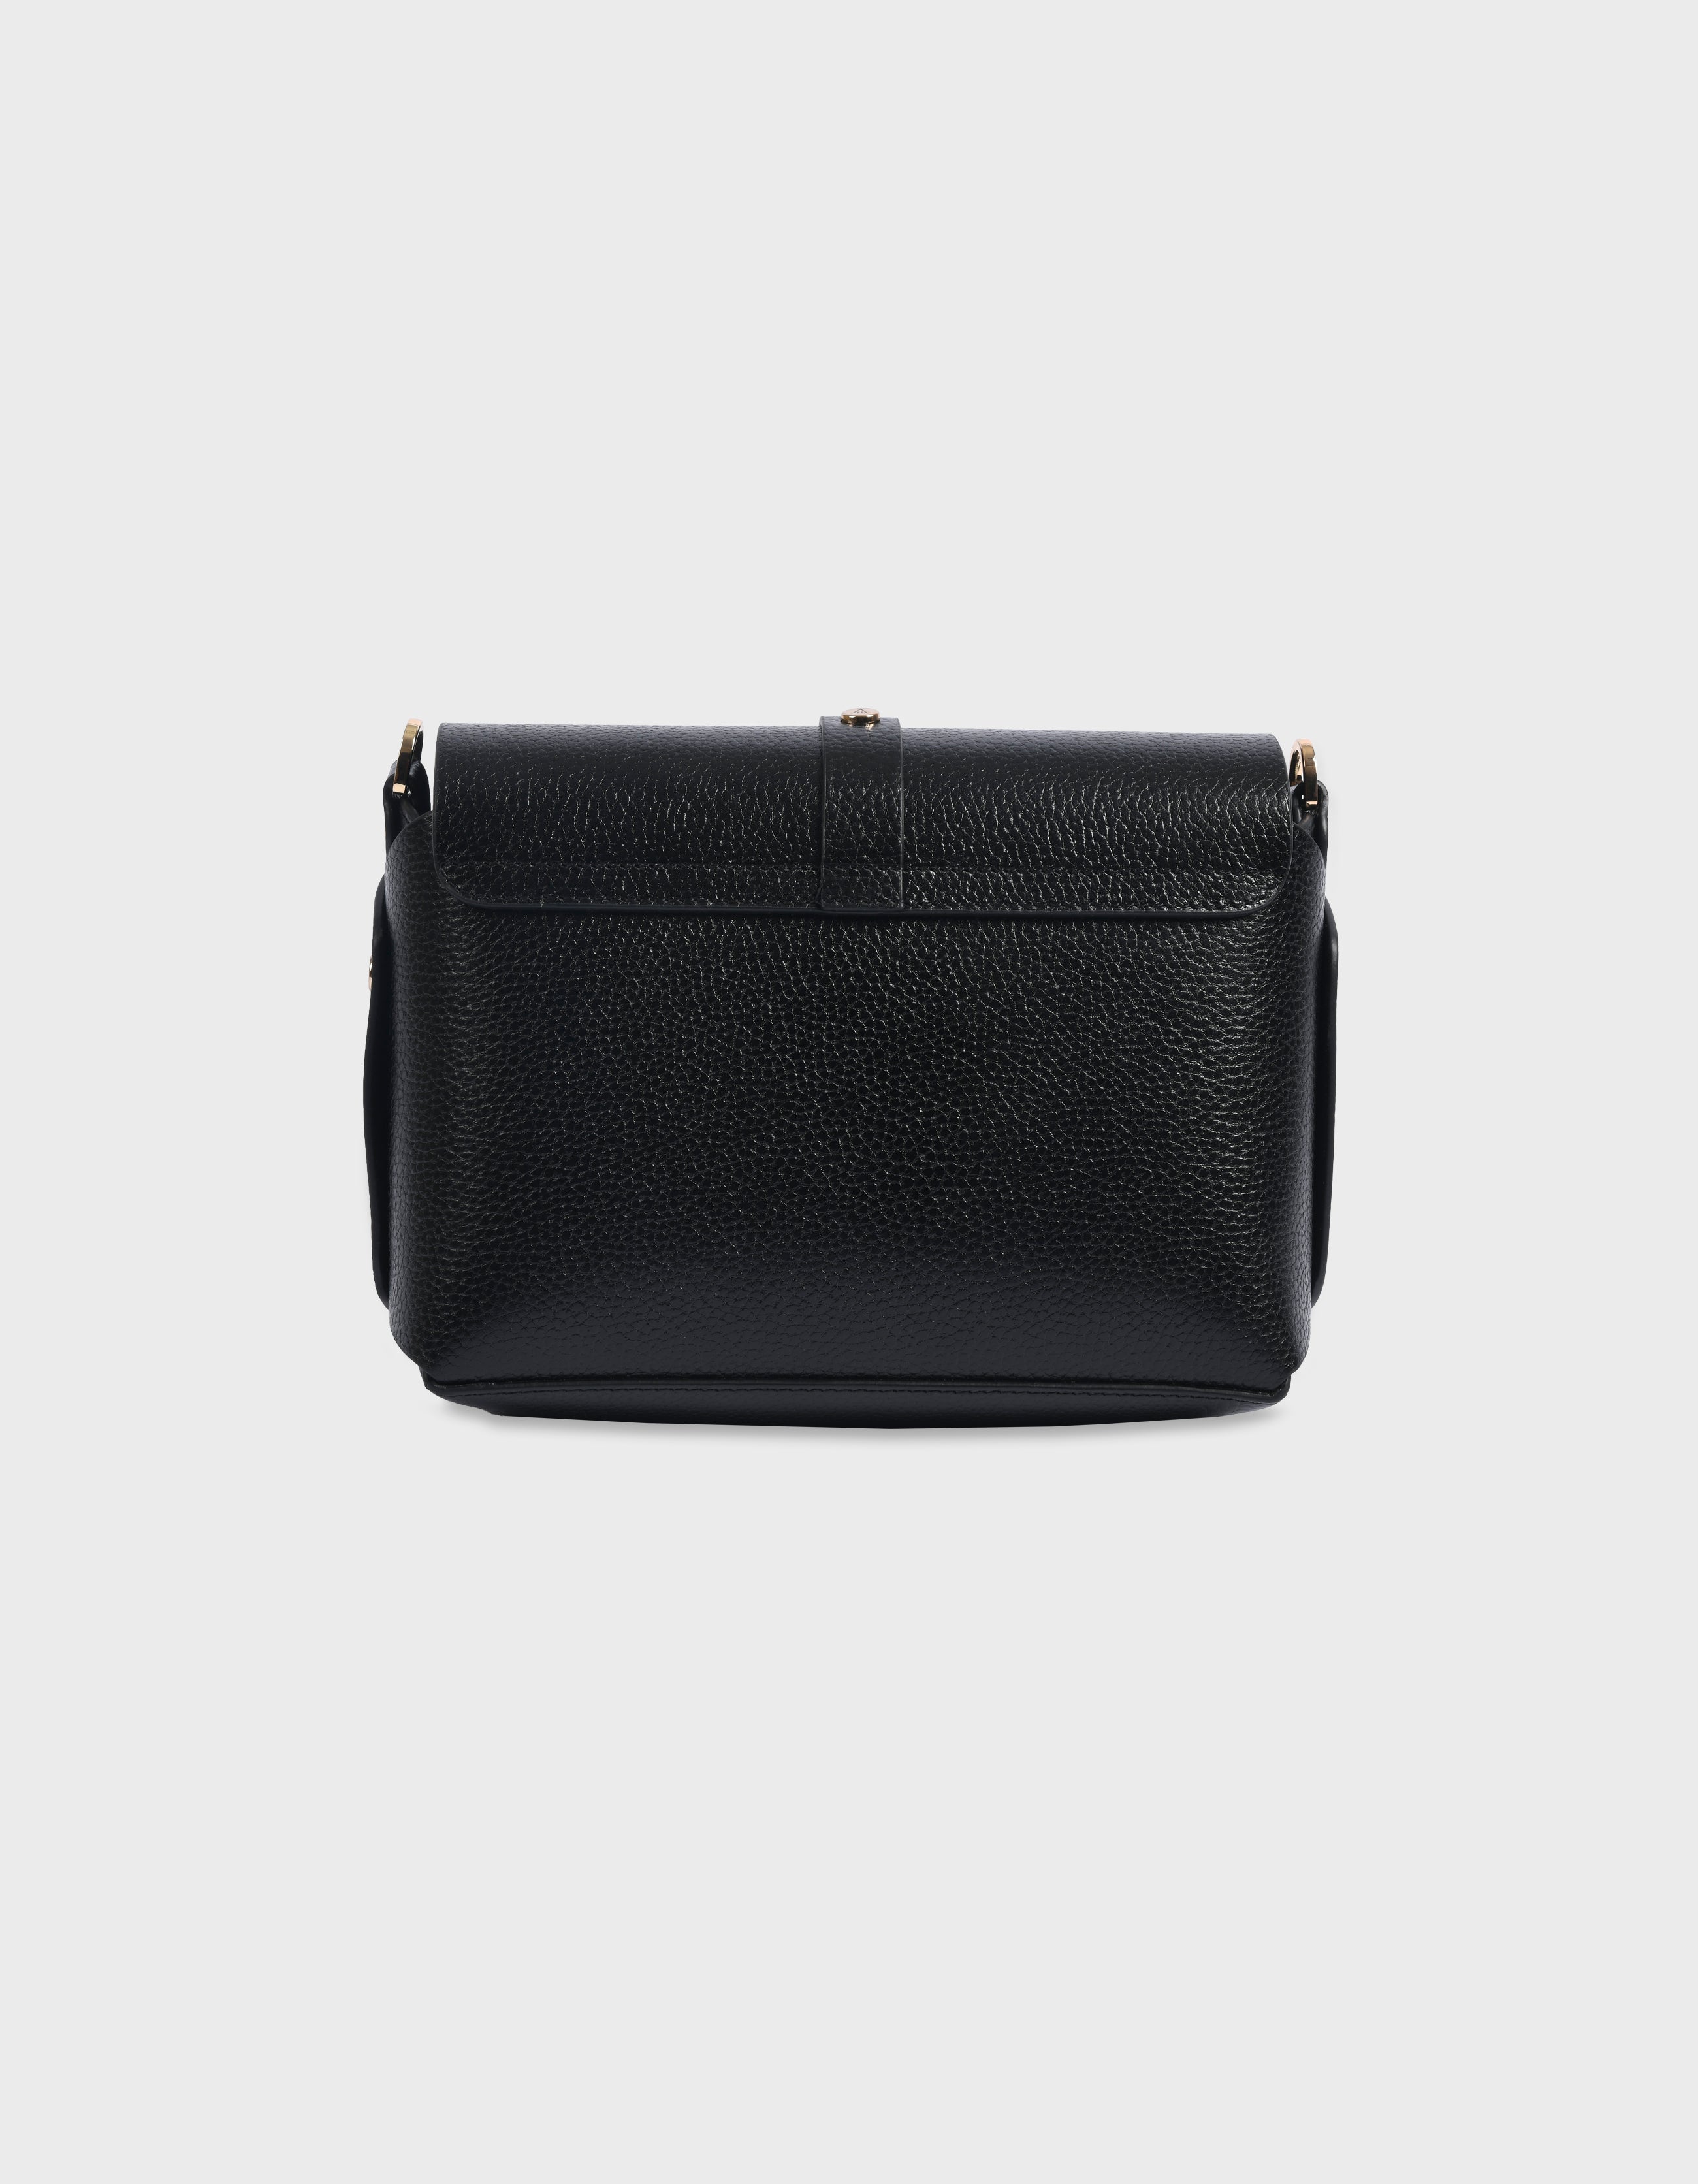 Hiva Atelier | Harmonia Shoulder Bag Black | Beautiful and Versatile Leather Accessories